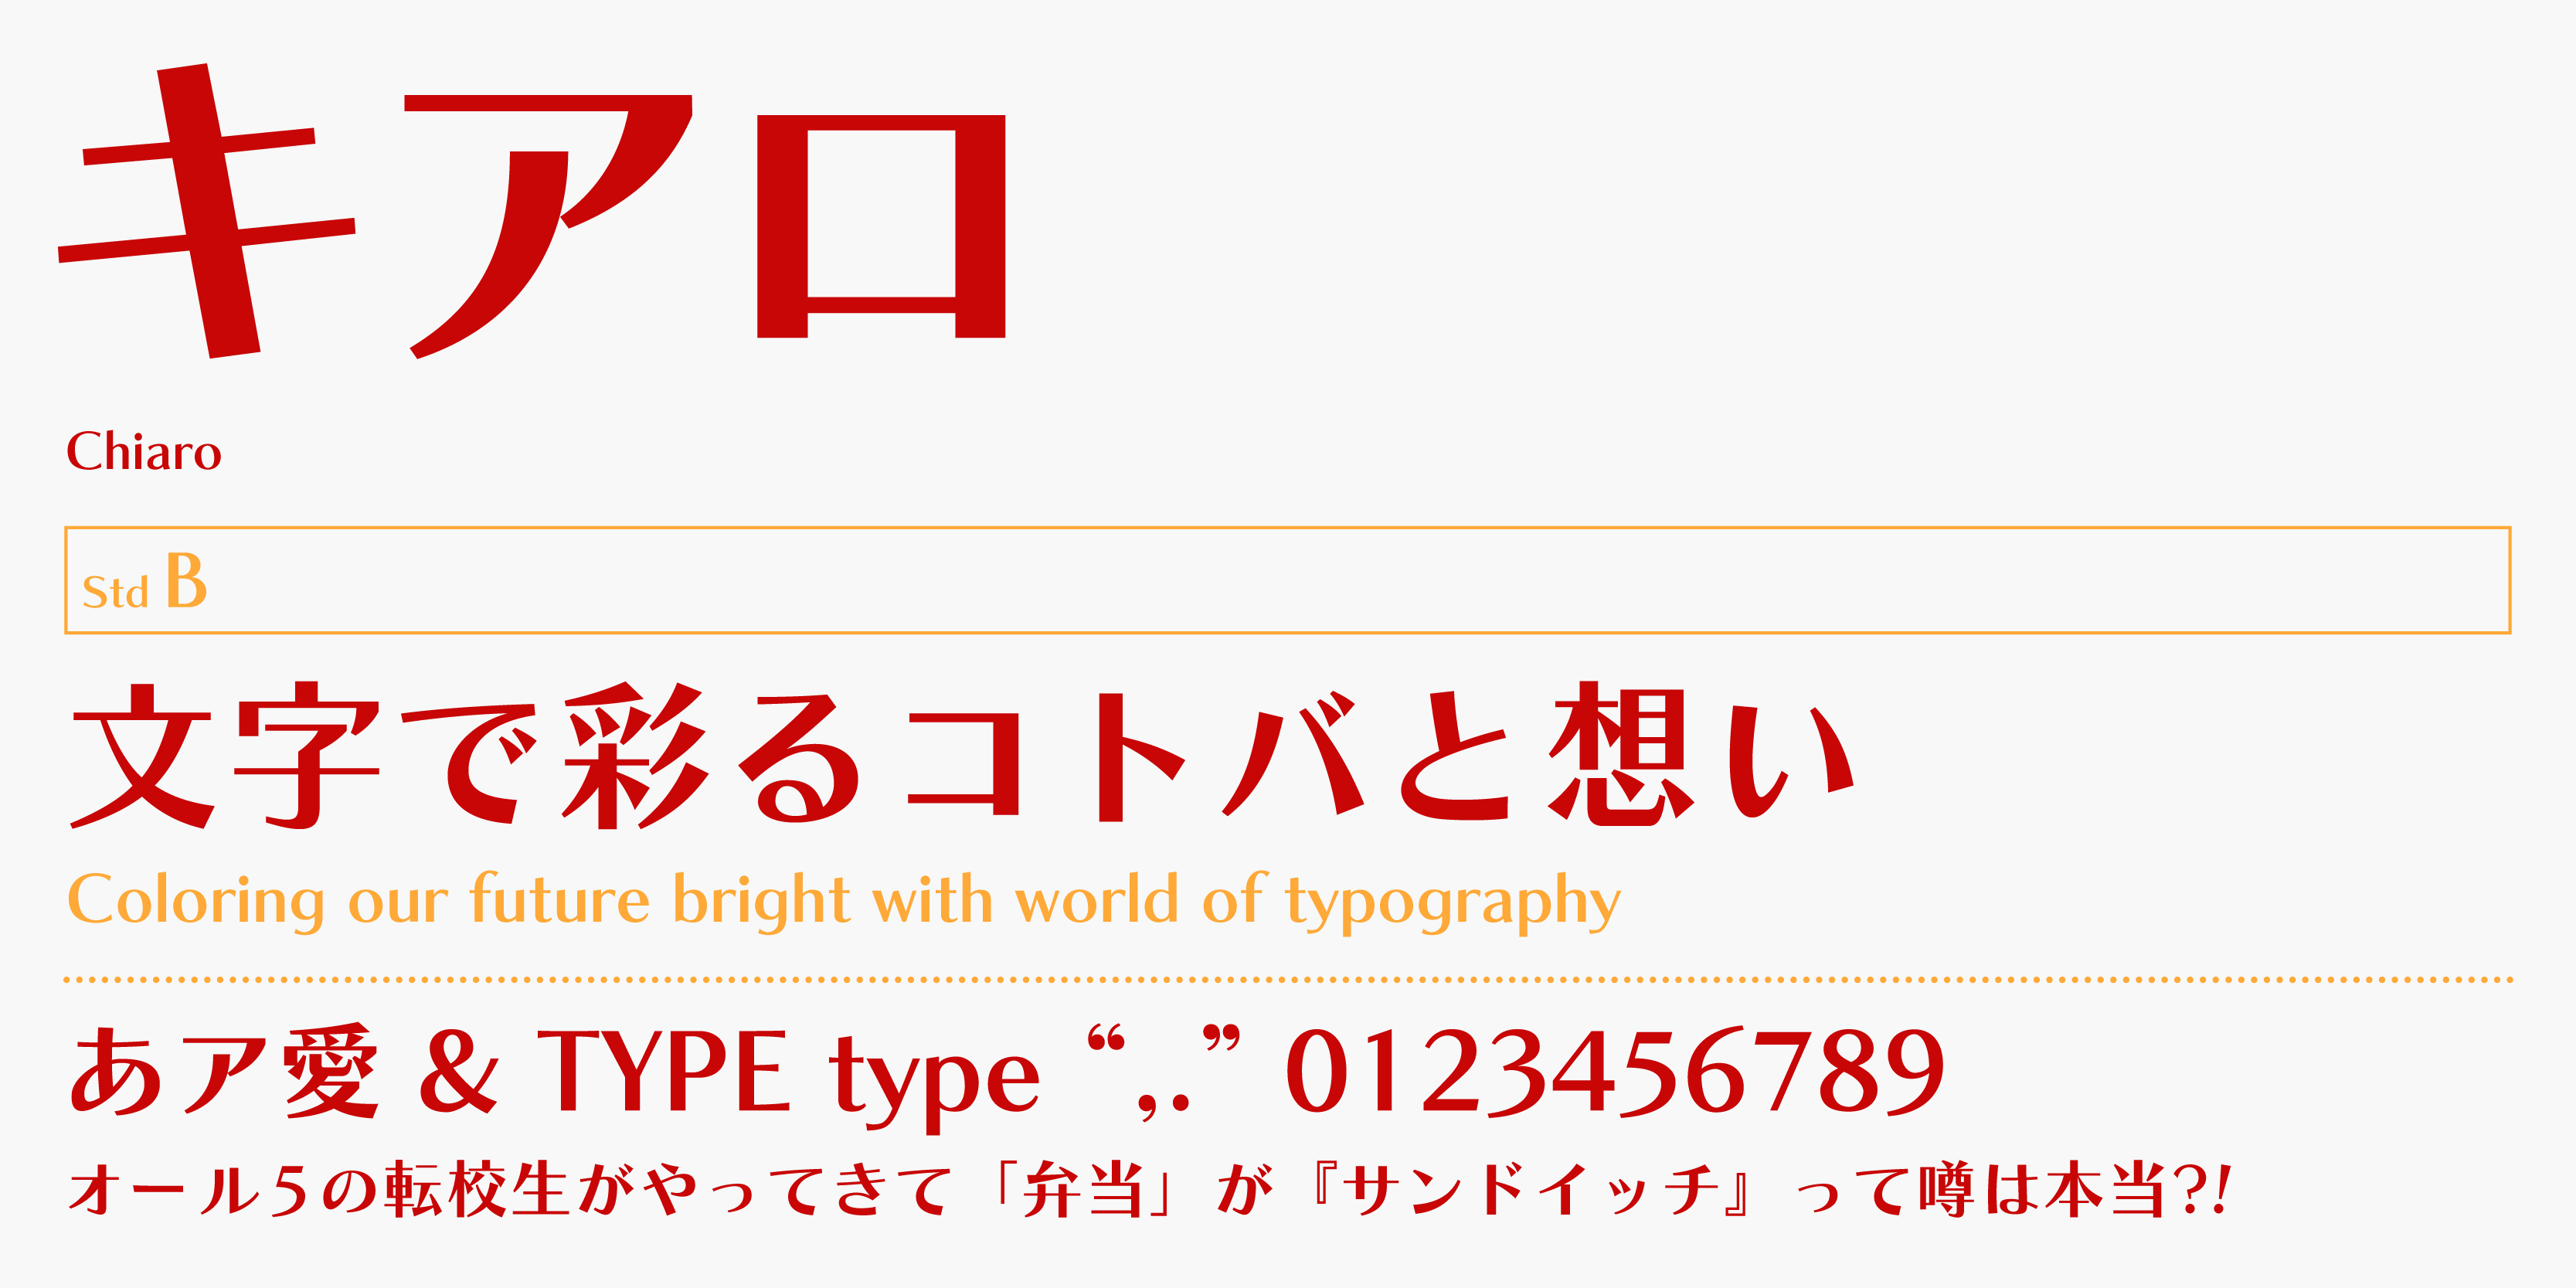 Card displaying FOT-Chiaro Std typeface in various styles